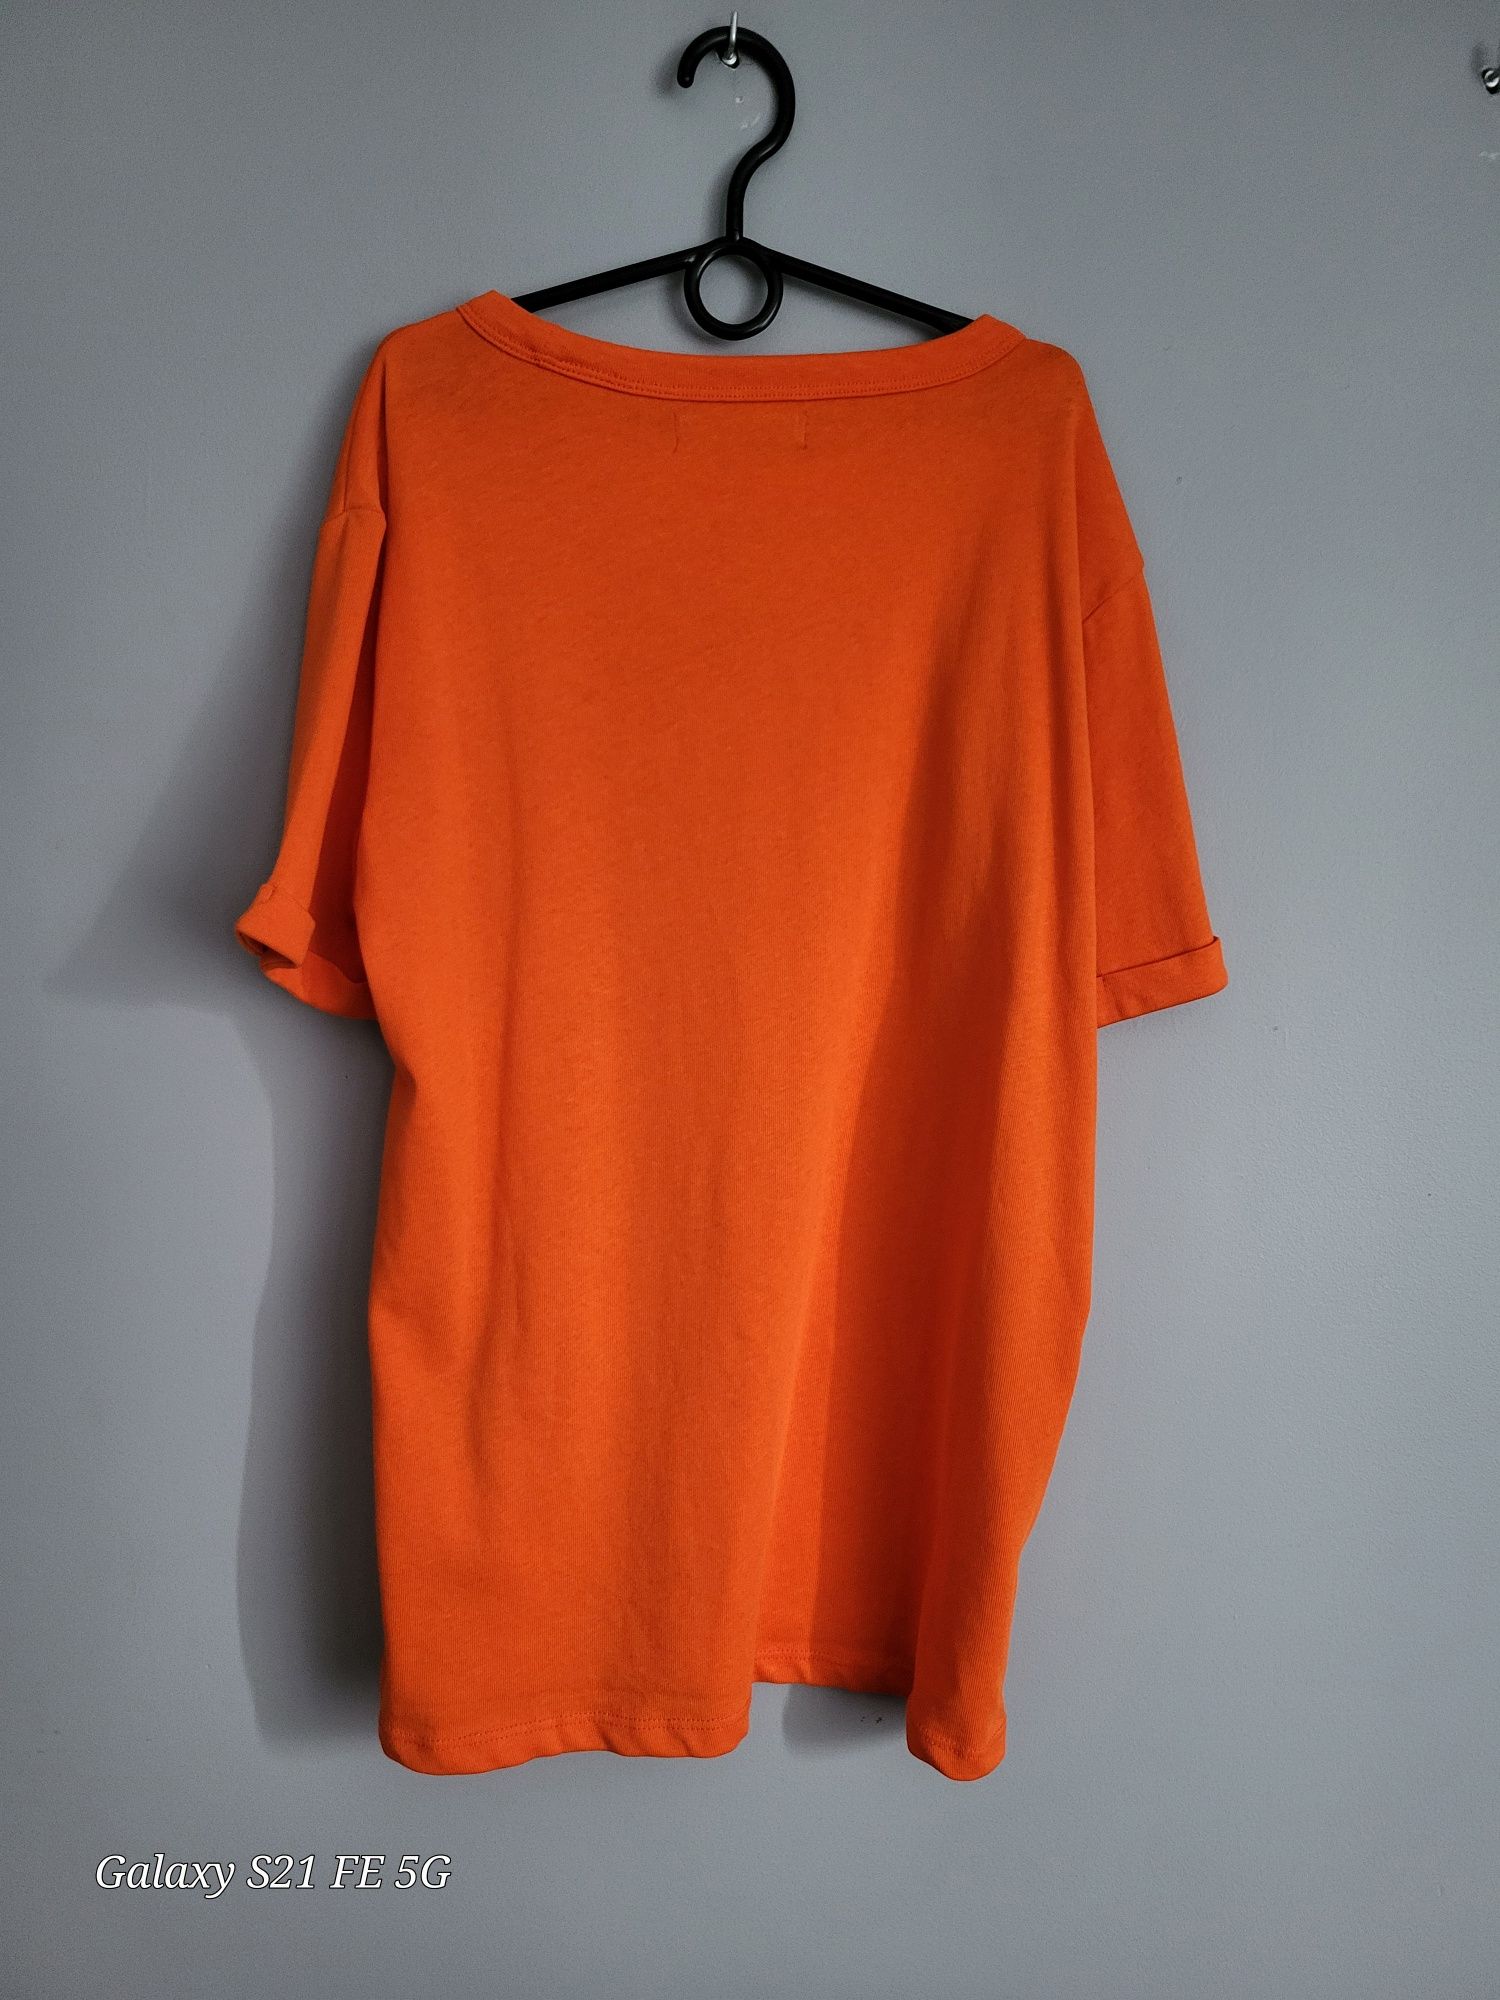 Koszulka tshirt pomarańczowa neon mohito rozmiar XS 34